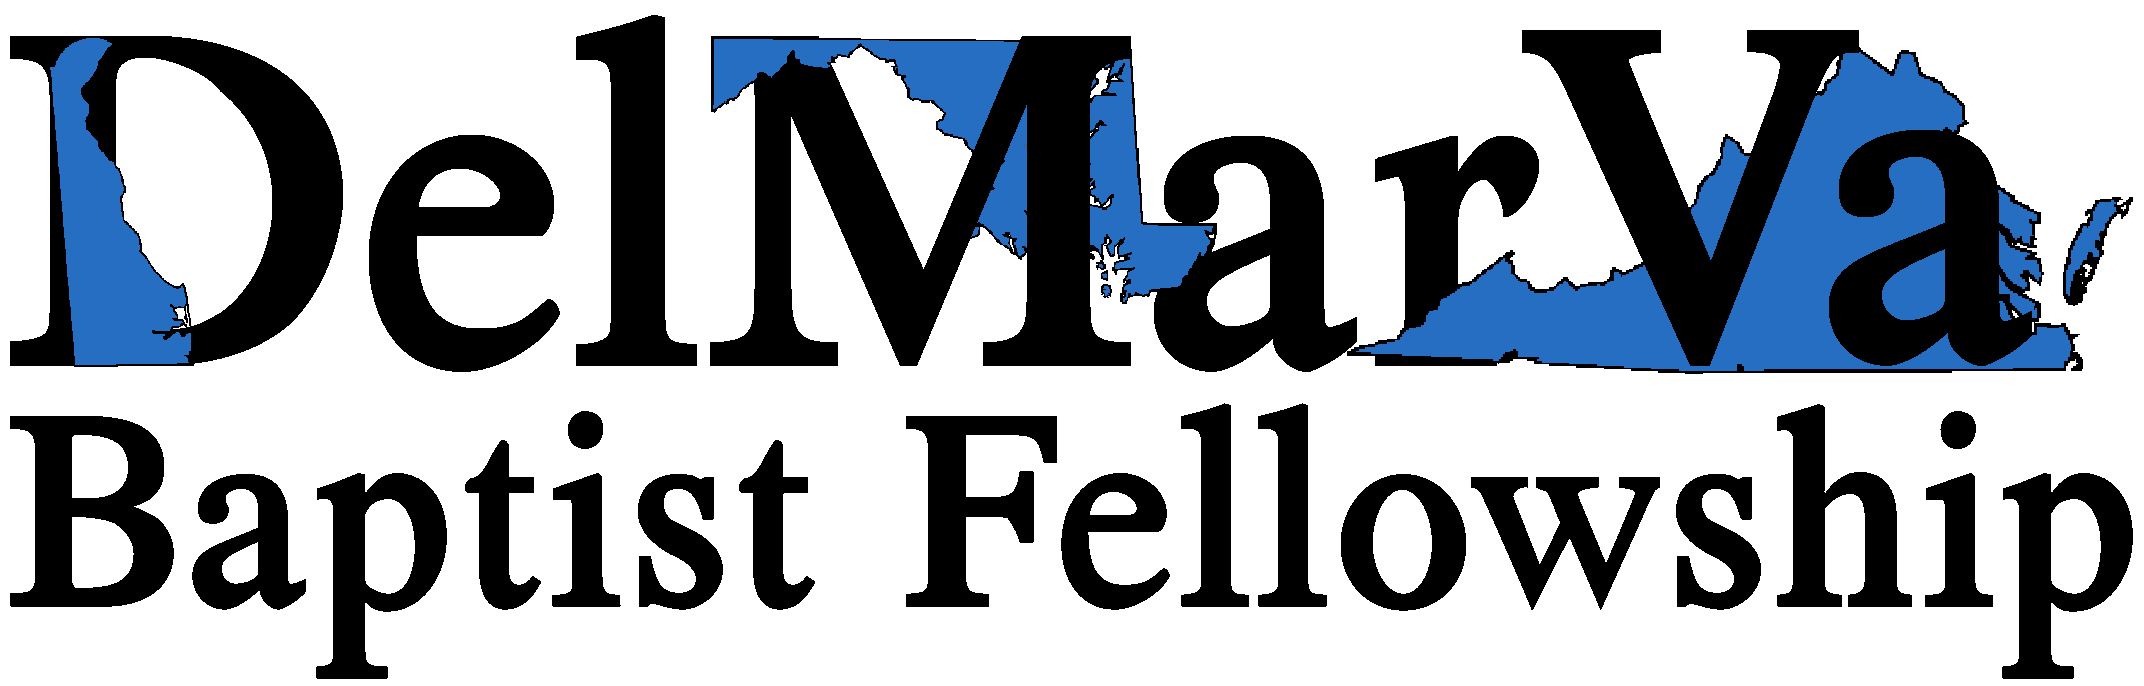 Delmarva Baptist Fellowship Logo